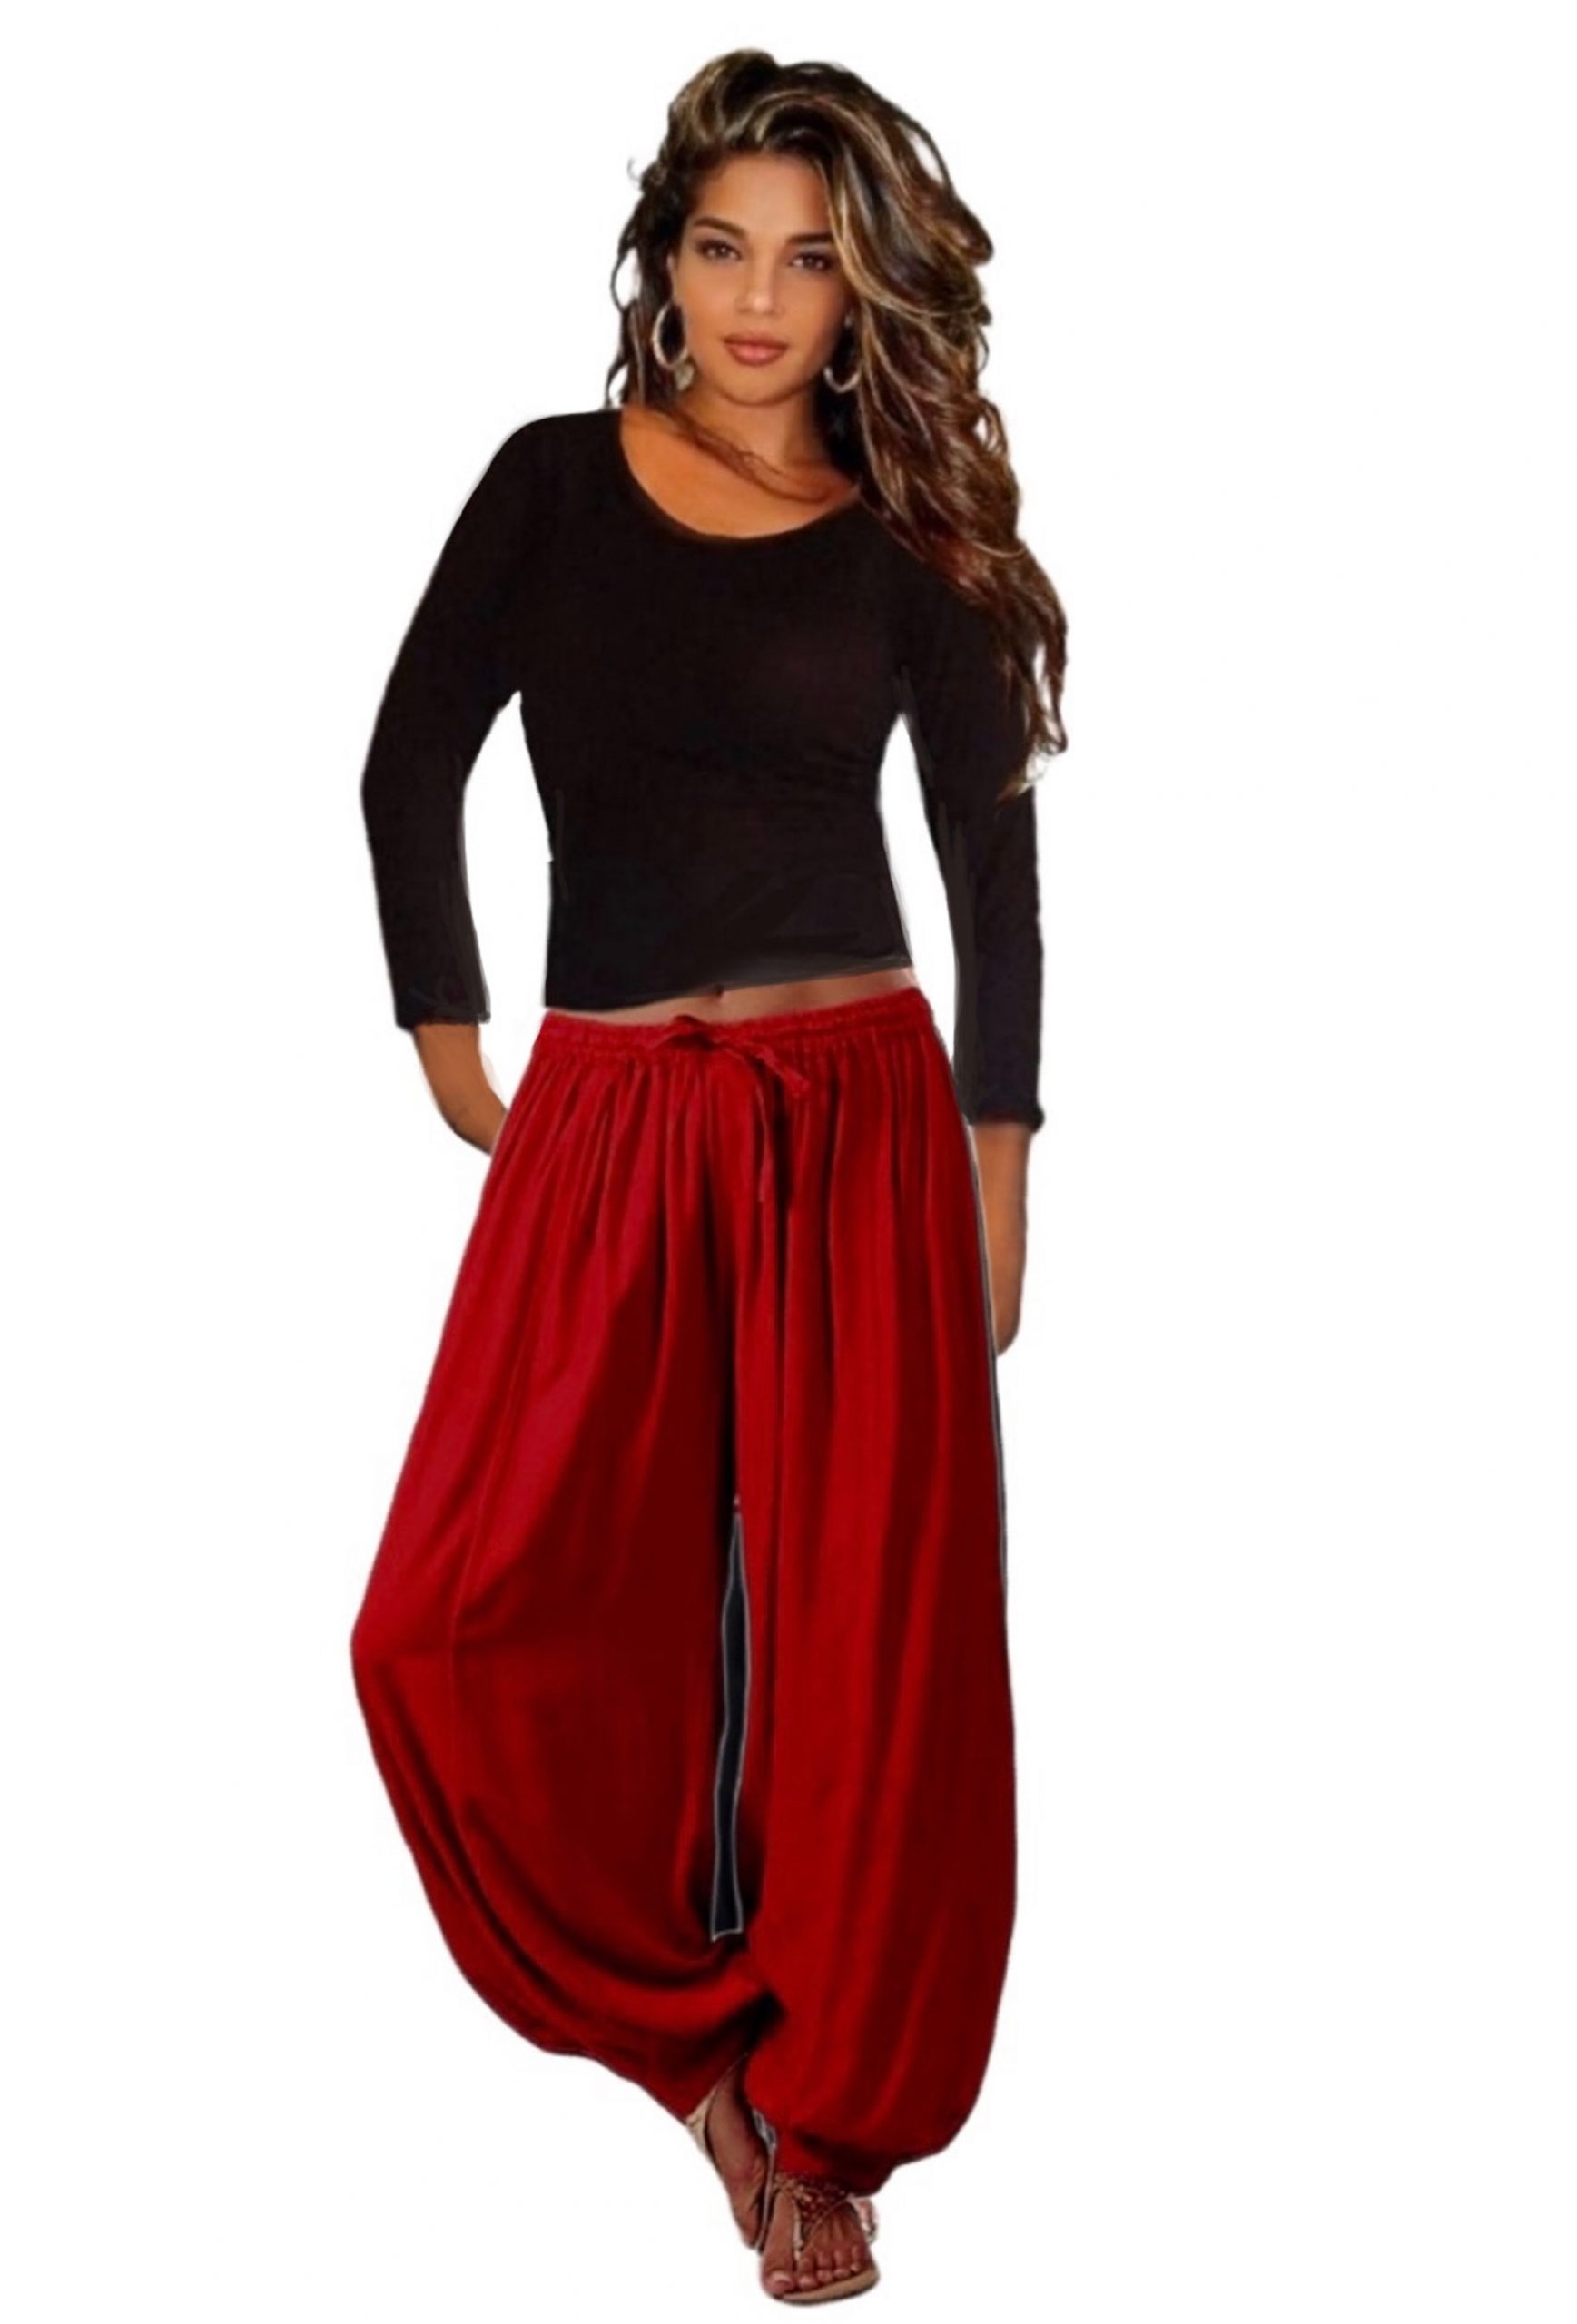 Women Yoga Pants Elastic Loose Casual Cotton Soft Yoga Sports Dance Harem Pants  Plus Size 3xl Bloomers Fitness Sport Swe size XXXL Color Red